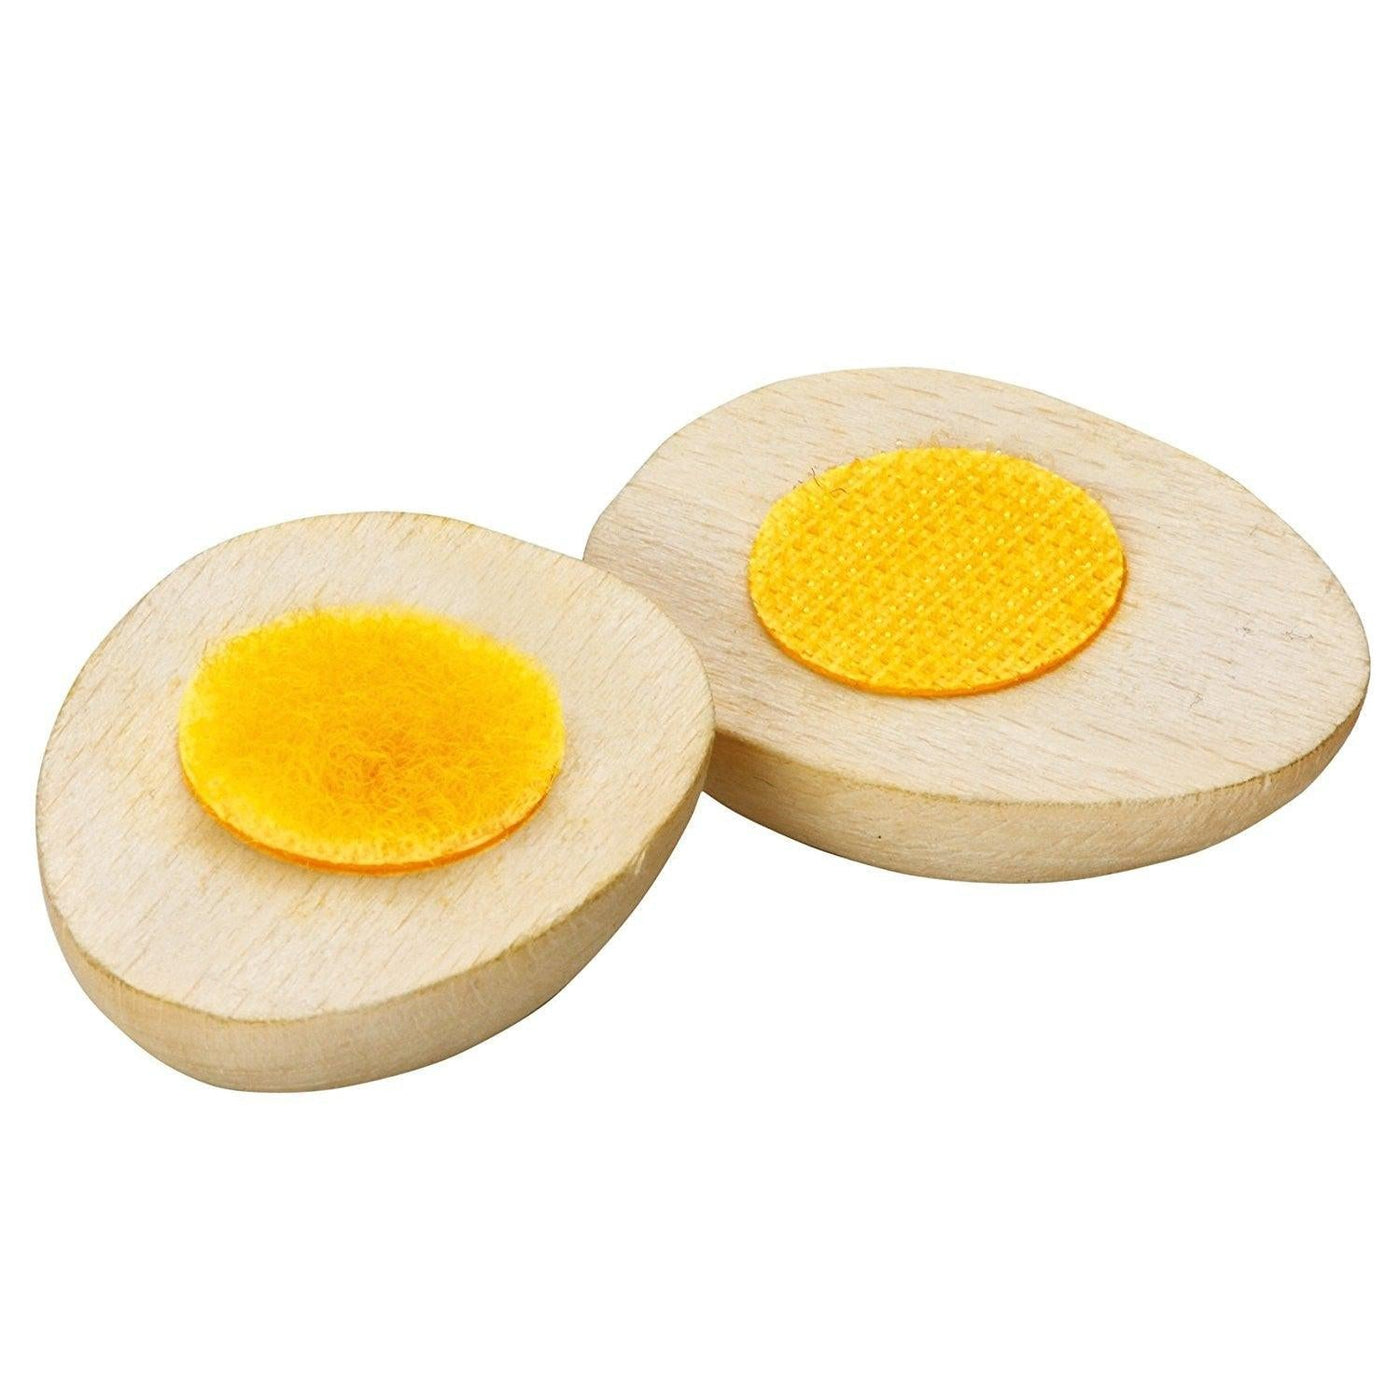 Erzi Egg to Cut - Wooden Play Food